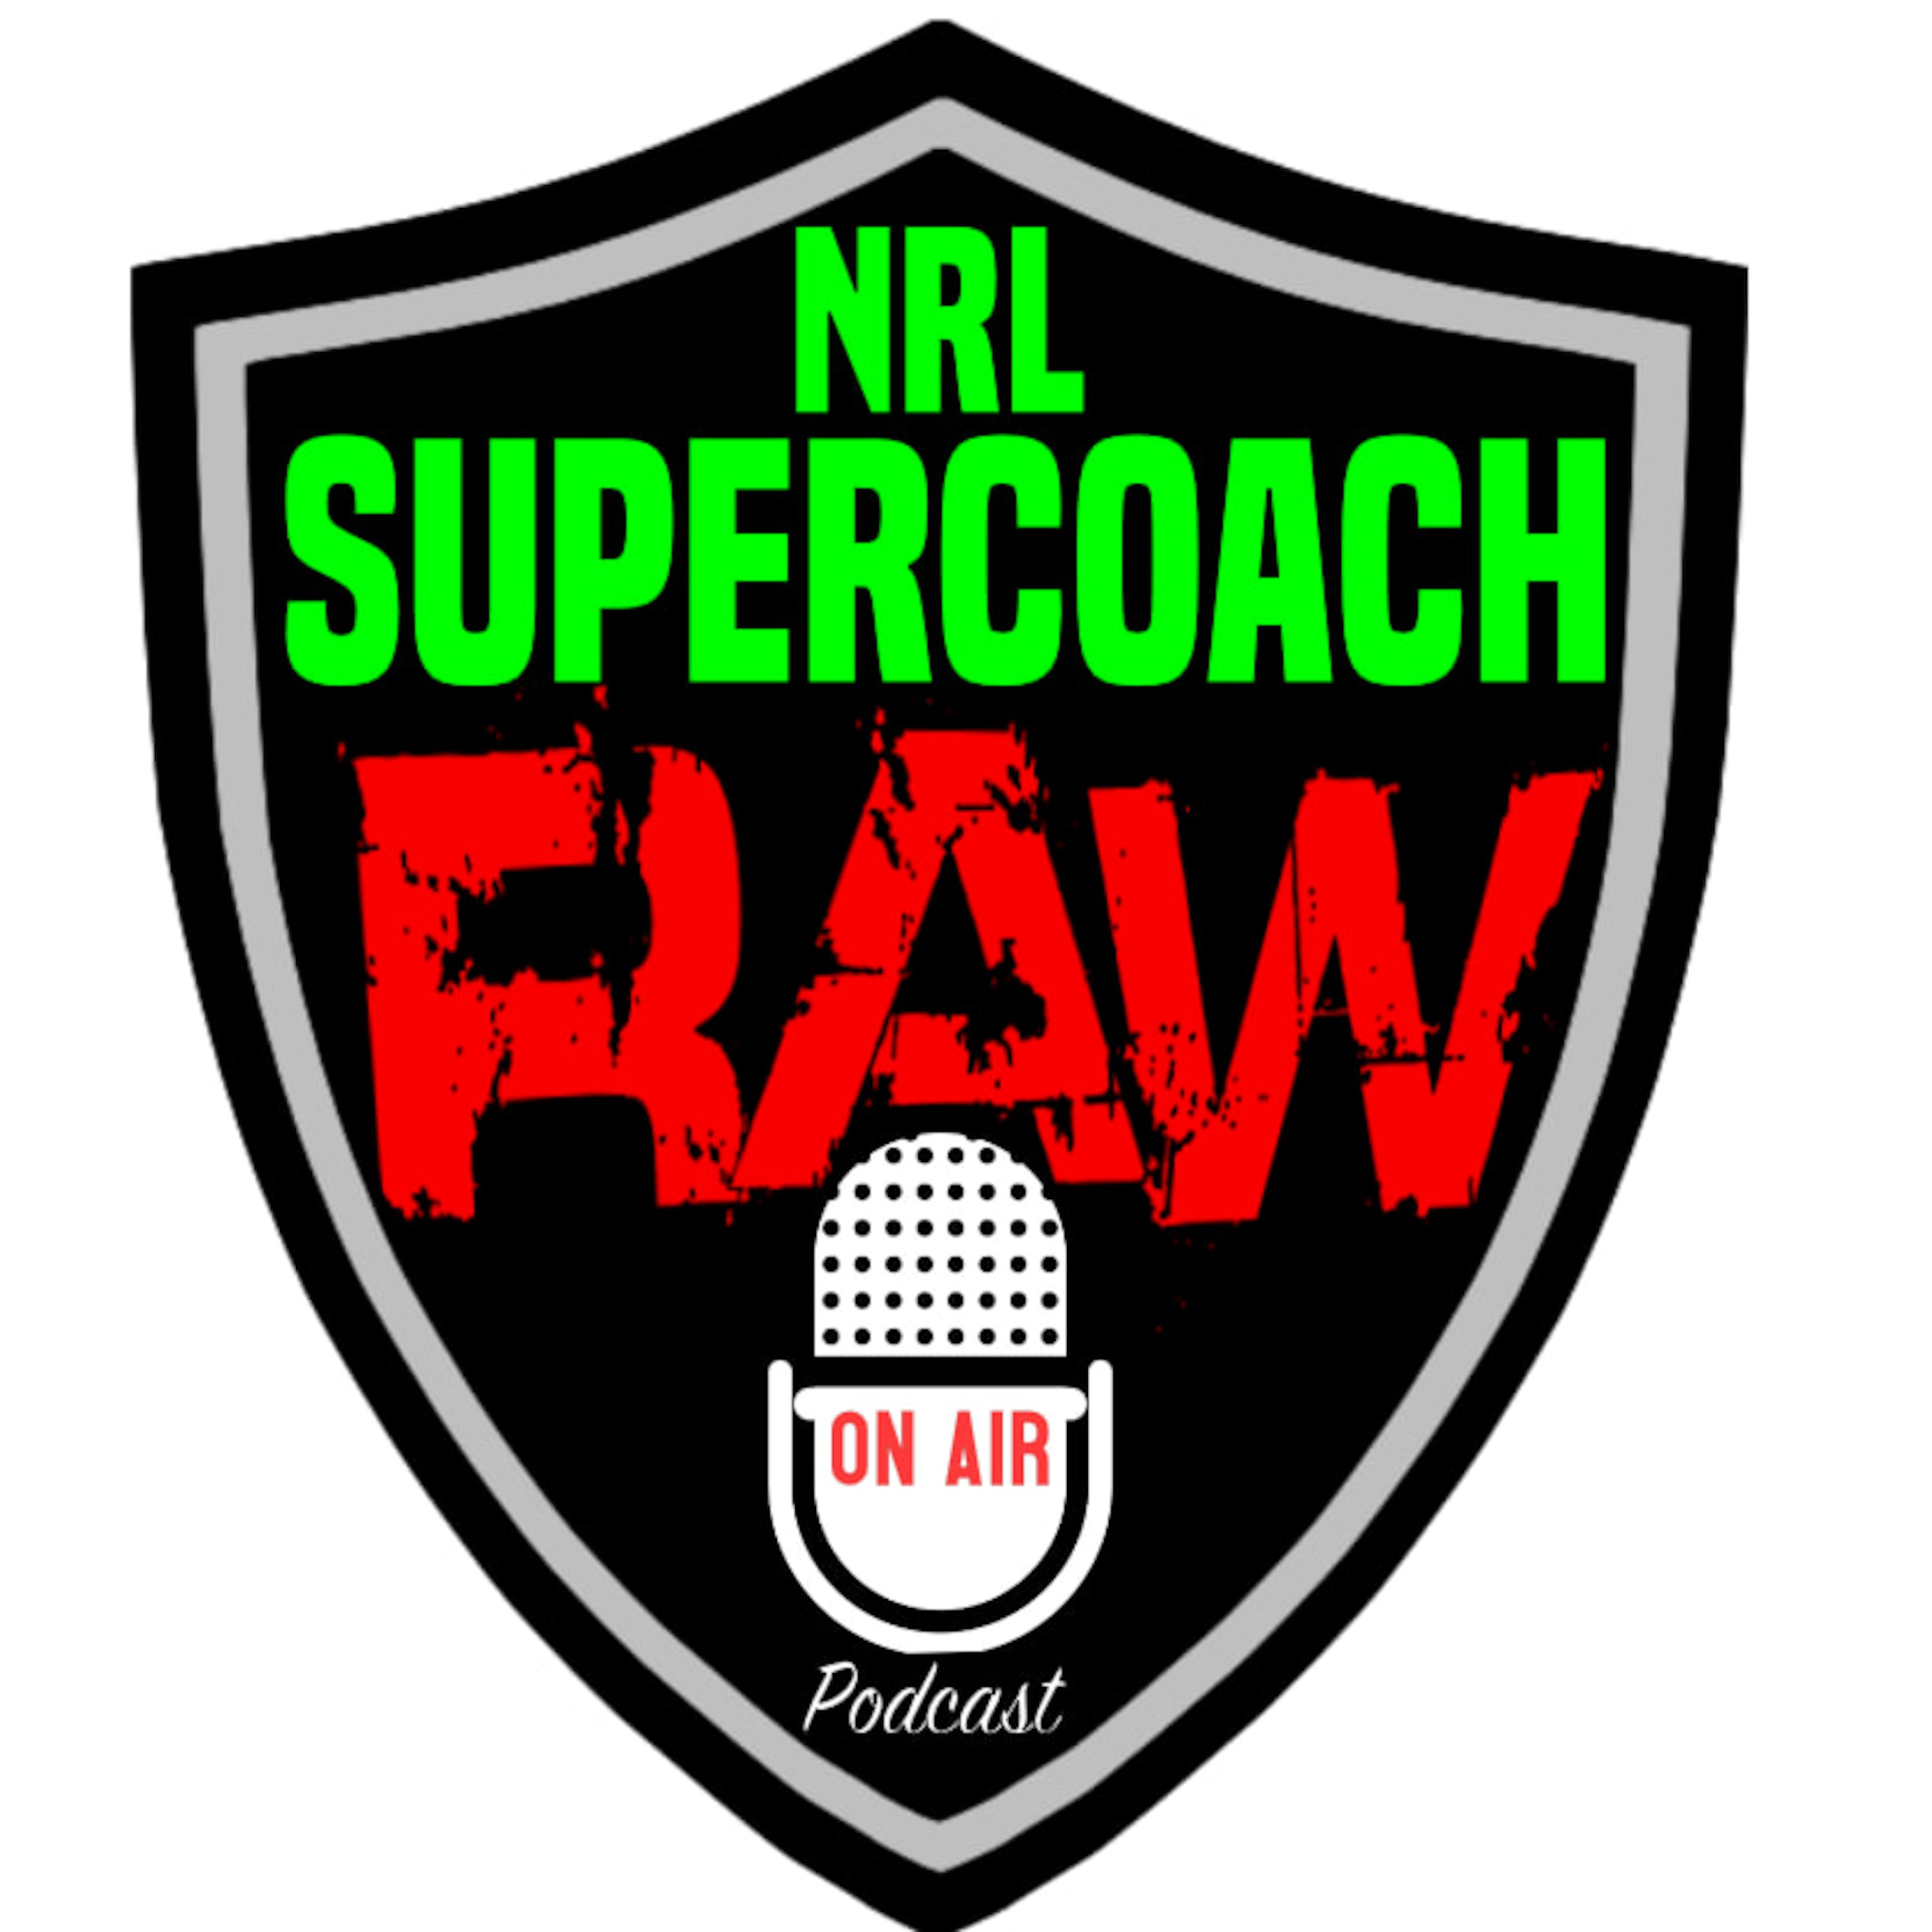 NRL Supercoach Raw podcast